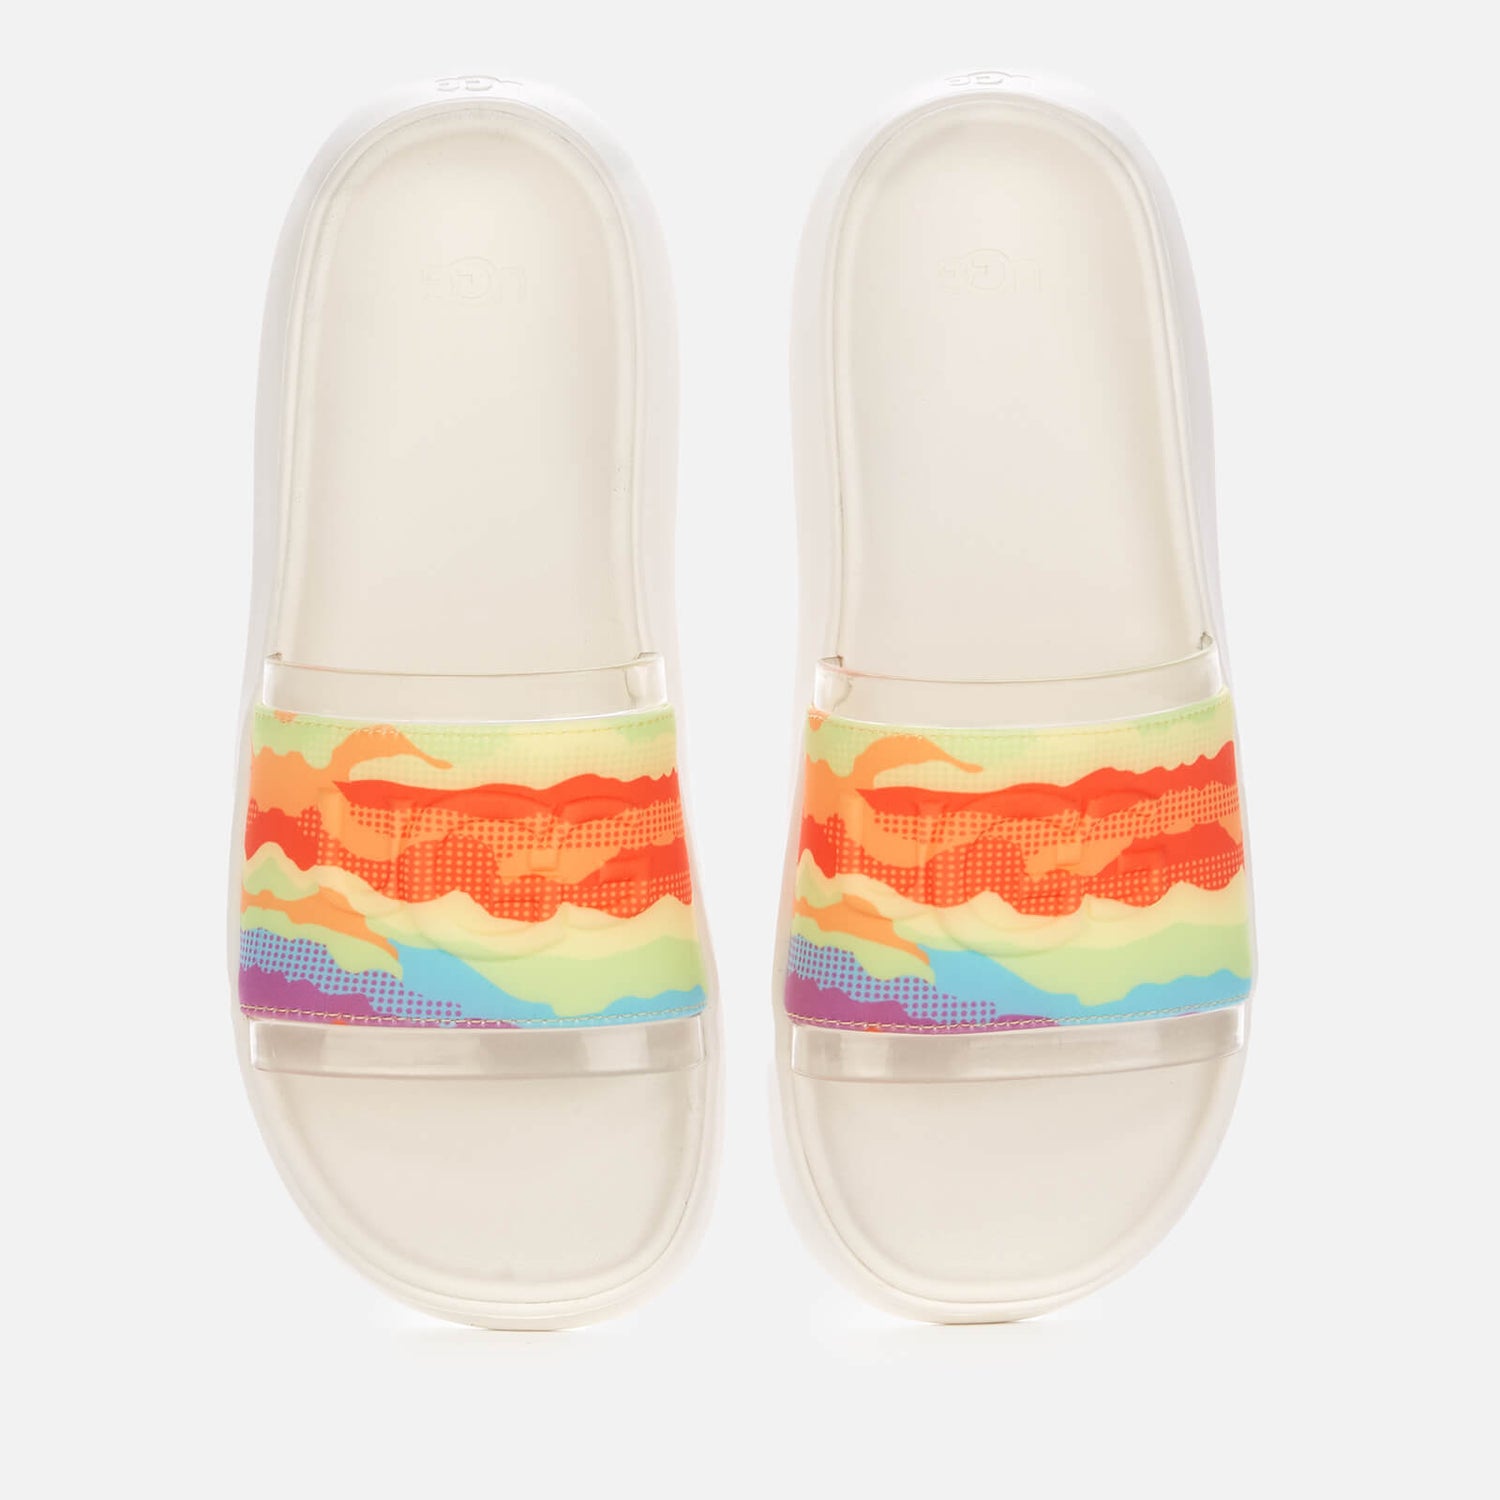 UGG Pride Collection Cali Slide Sandals - Rainbow Stripes